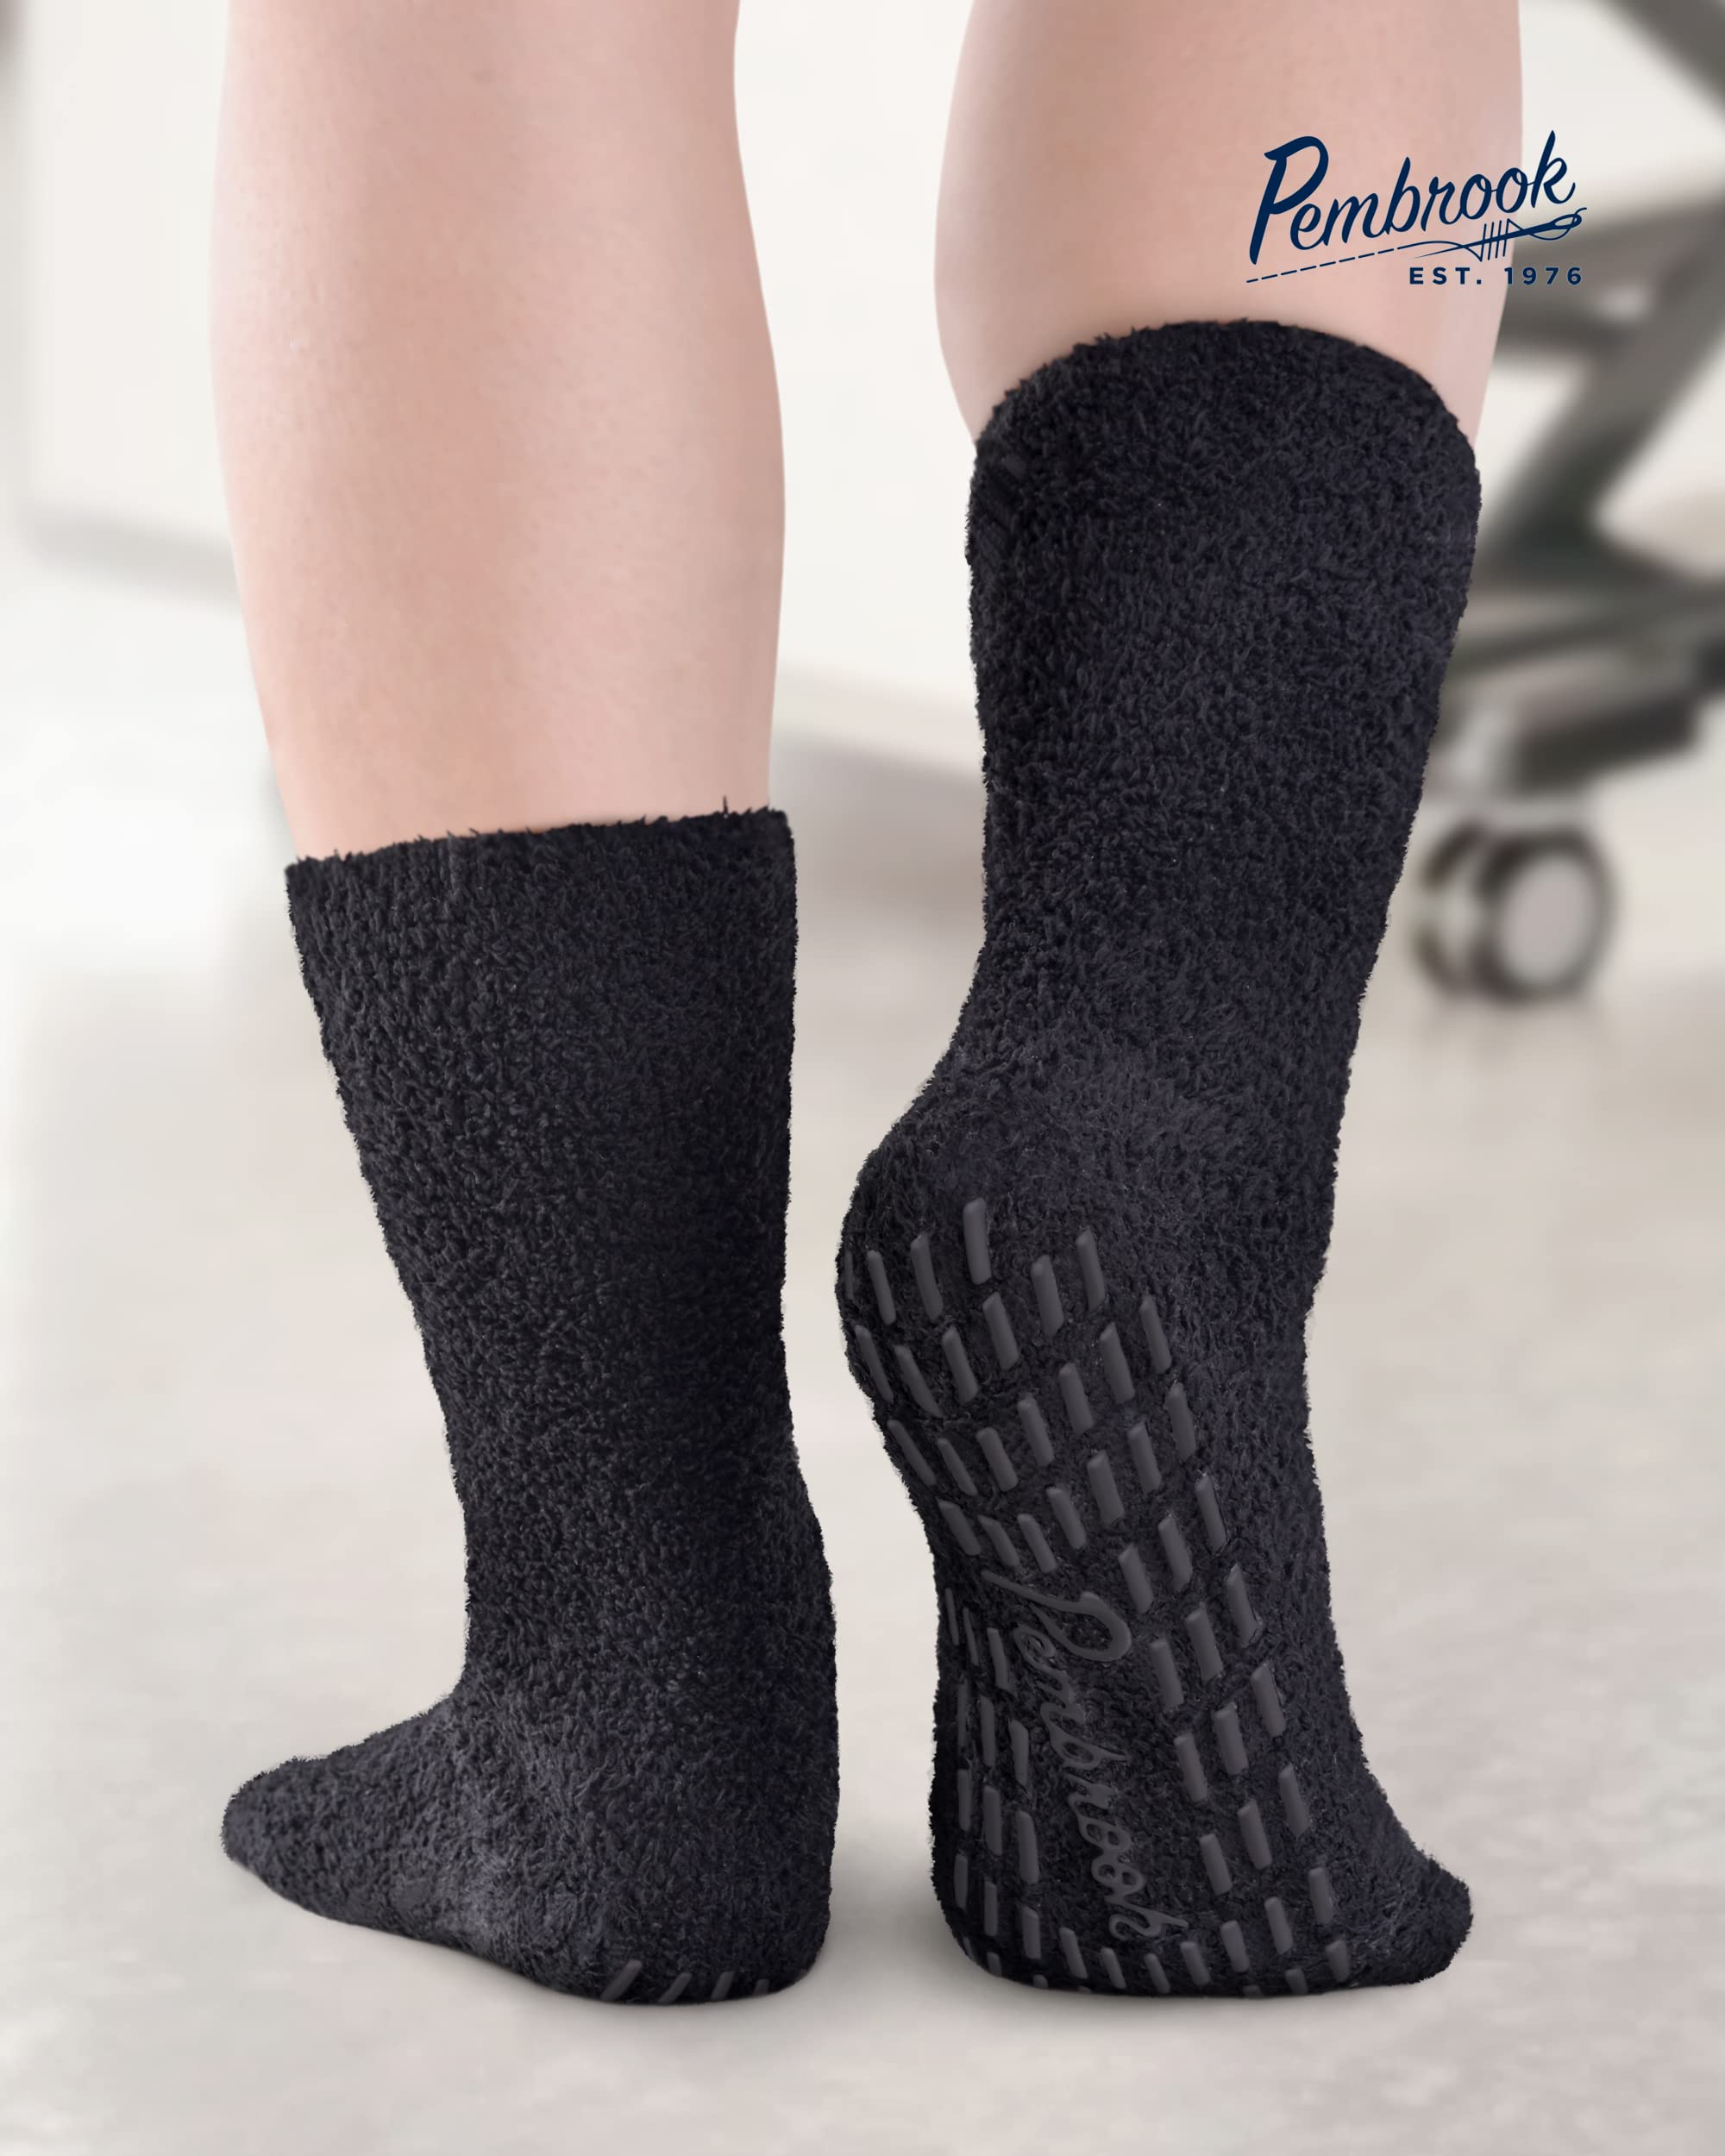 Pembrook Fuzzy Slipper Socks with Grippers for Women and Men - Non Skid Socks / No Slip Fuzzy Socks